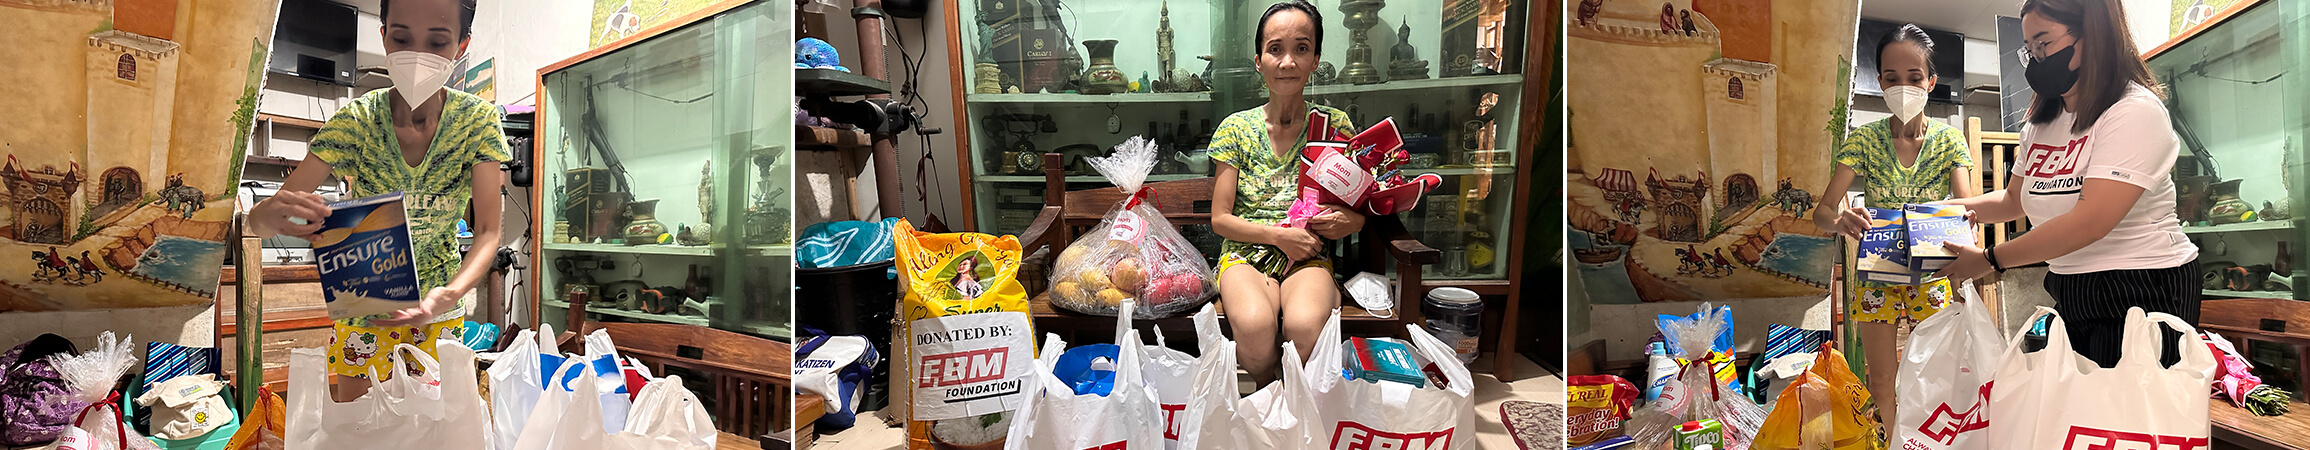 FBM Foundation helps 350 families in Quezon City